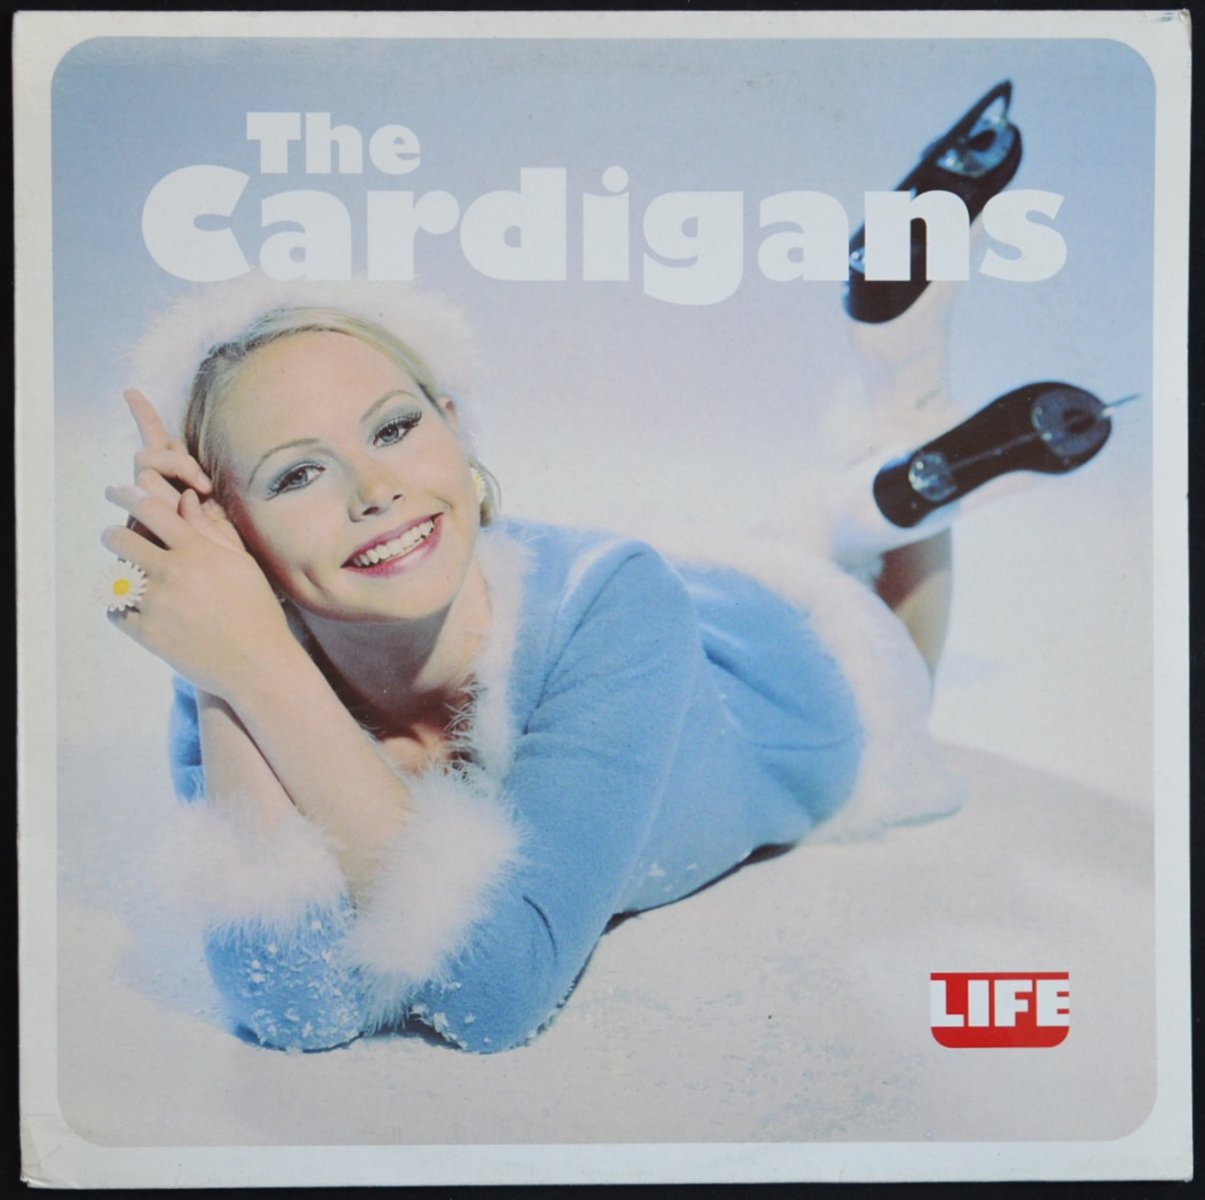 THE CARDIGANS / LIFE (1LP)